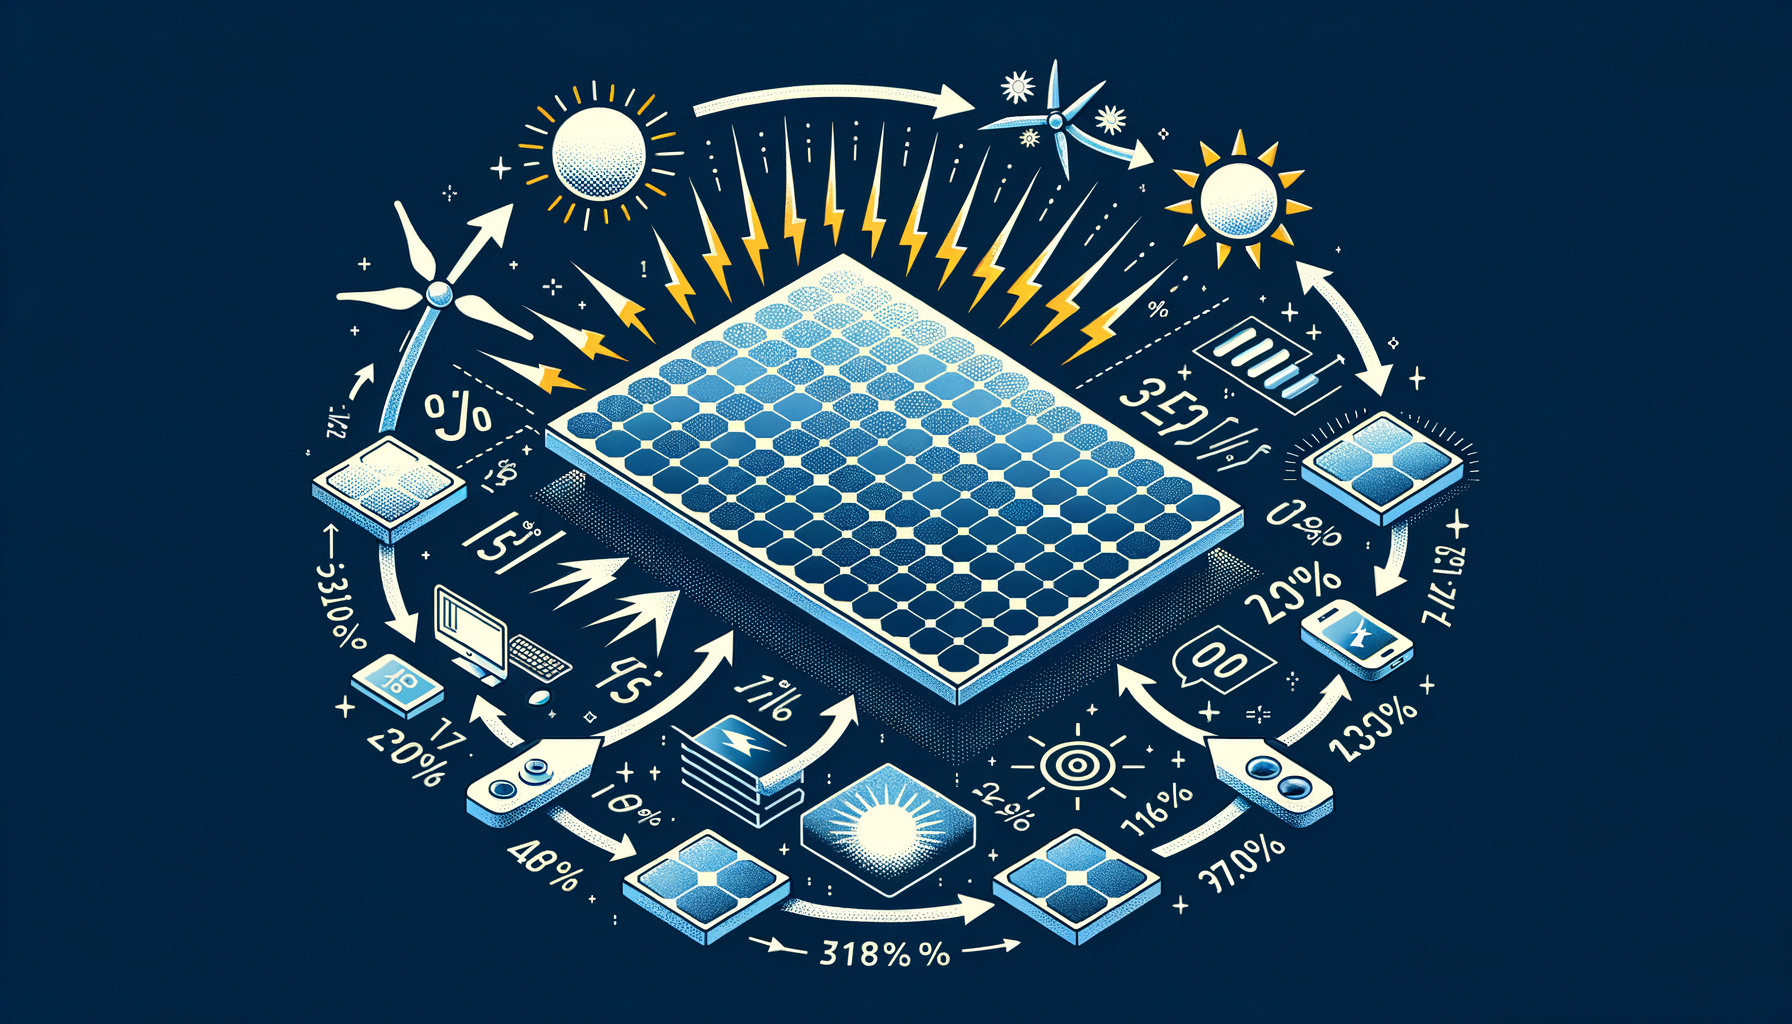 ALT: Illustration of solar panel efficiency